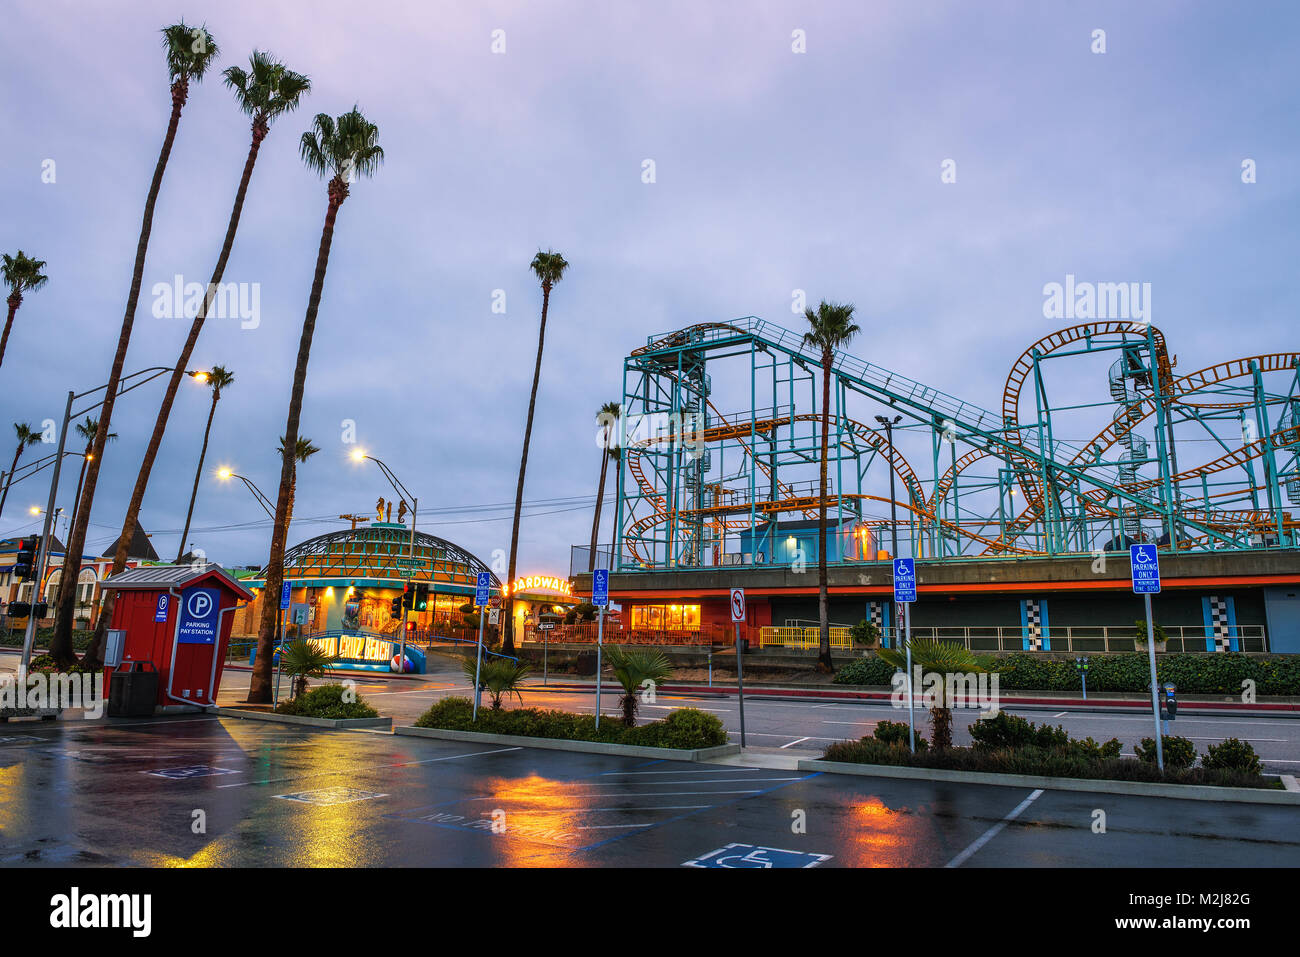 Santa Cruz Boardwalk and amusement park Stock Photo